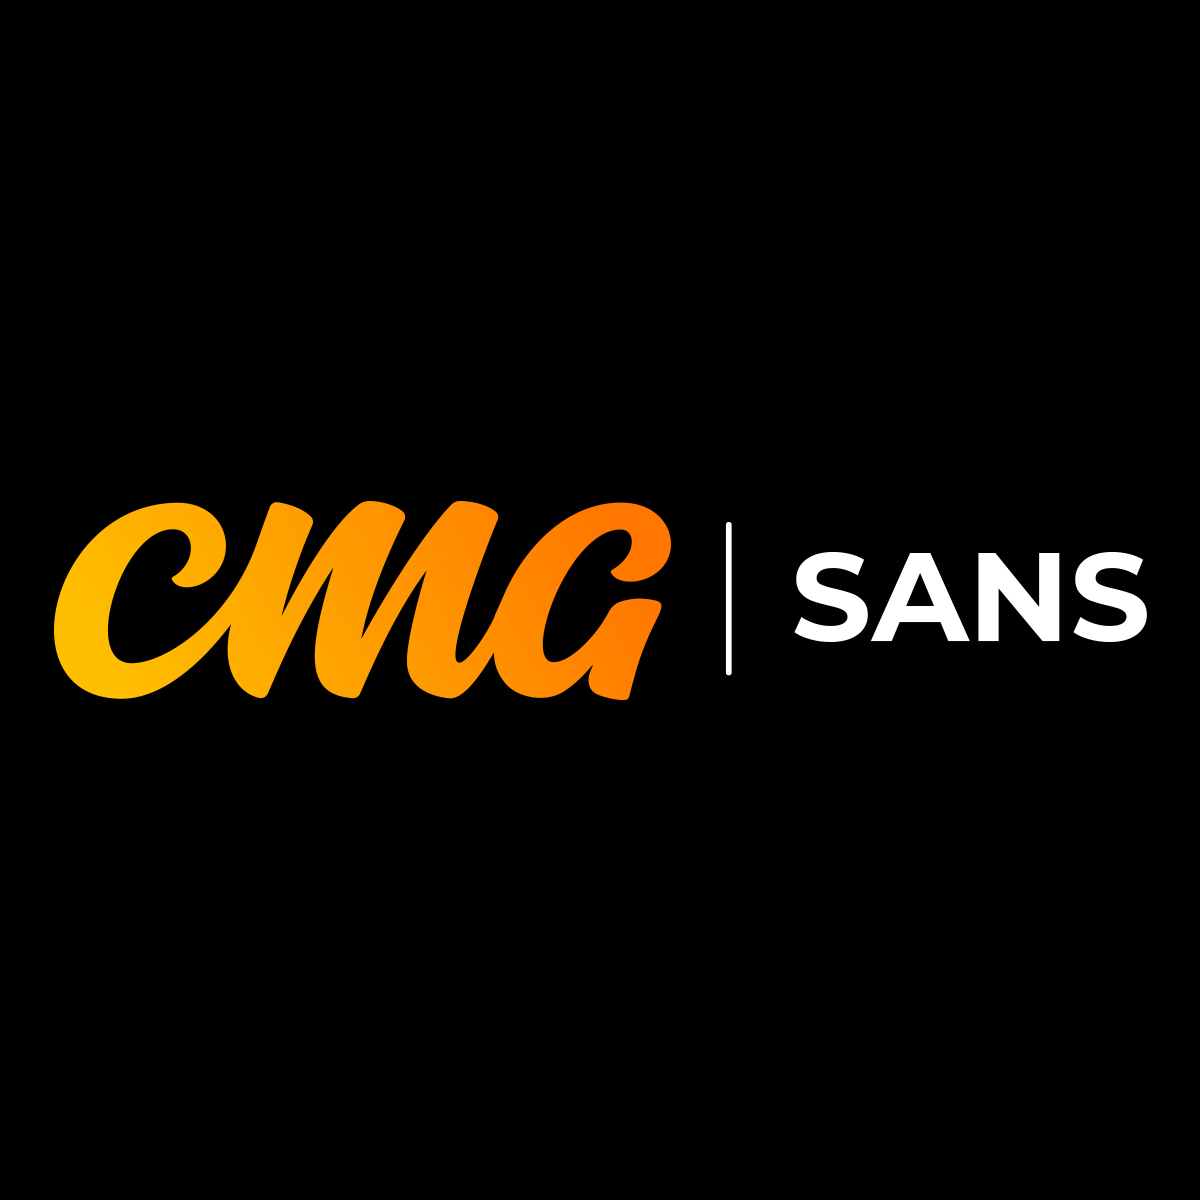 CMG Sans